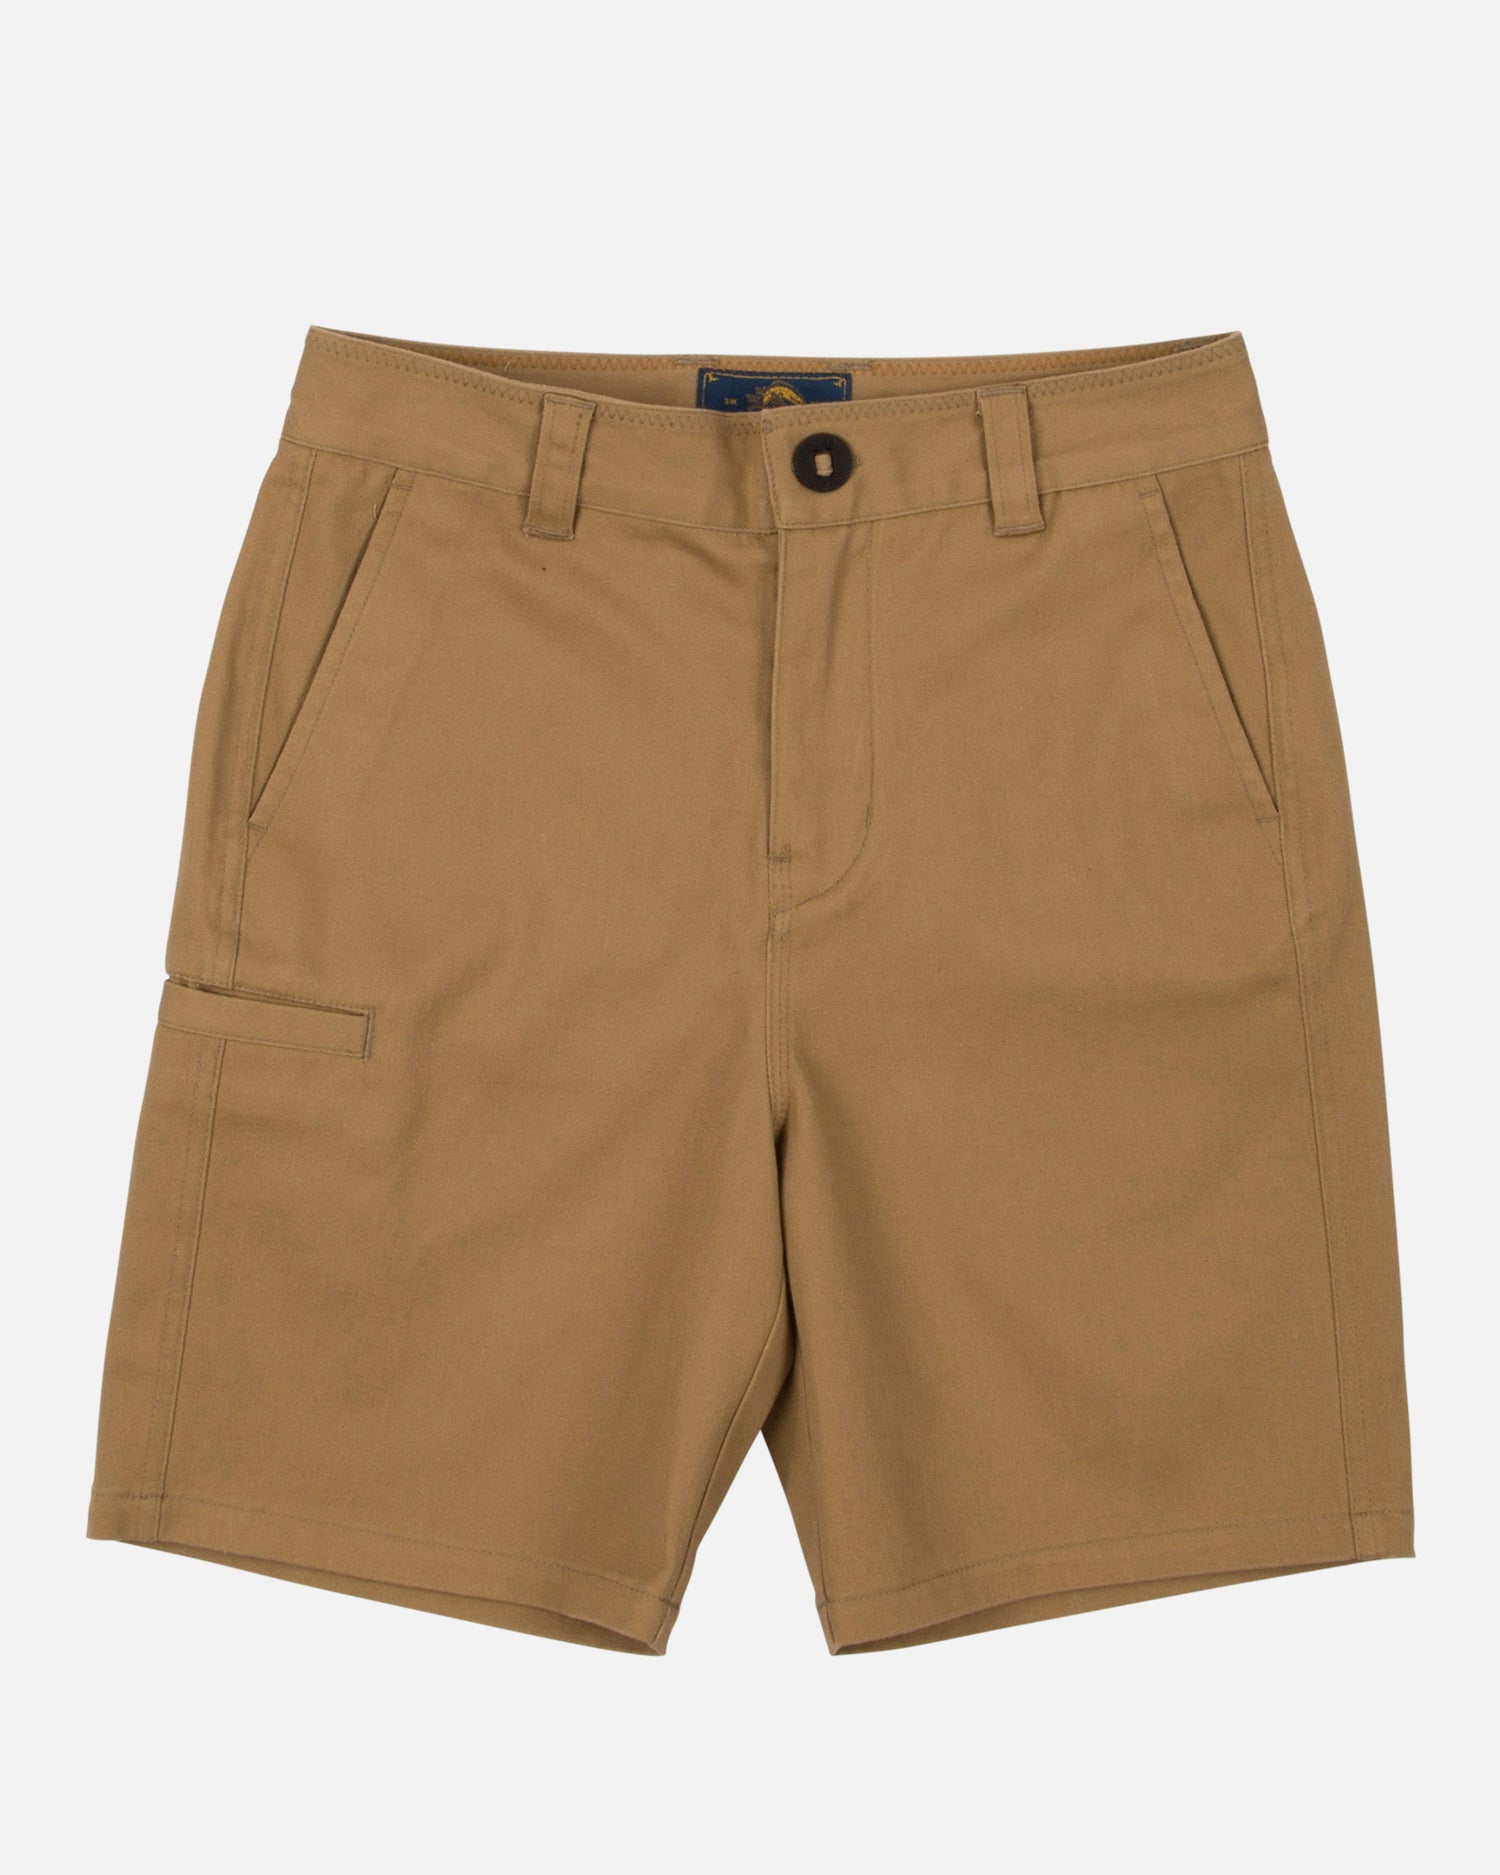 Deckhand Boys Workwear Brown Chino Short